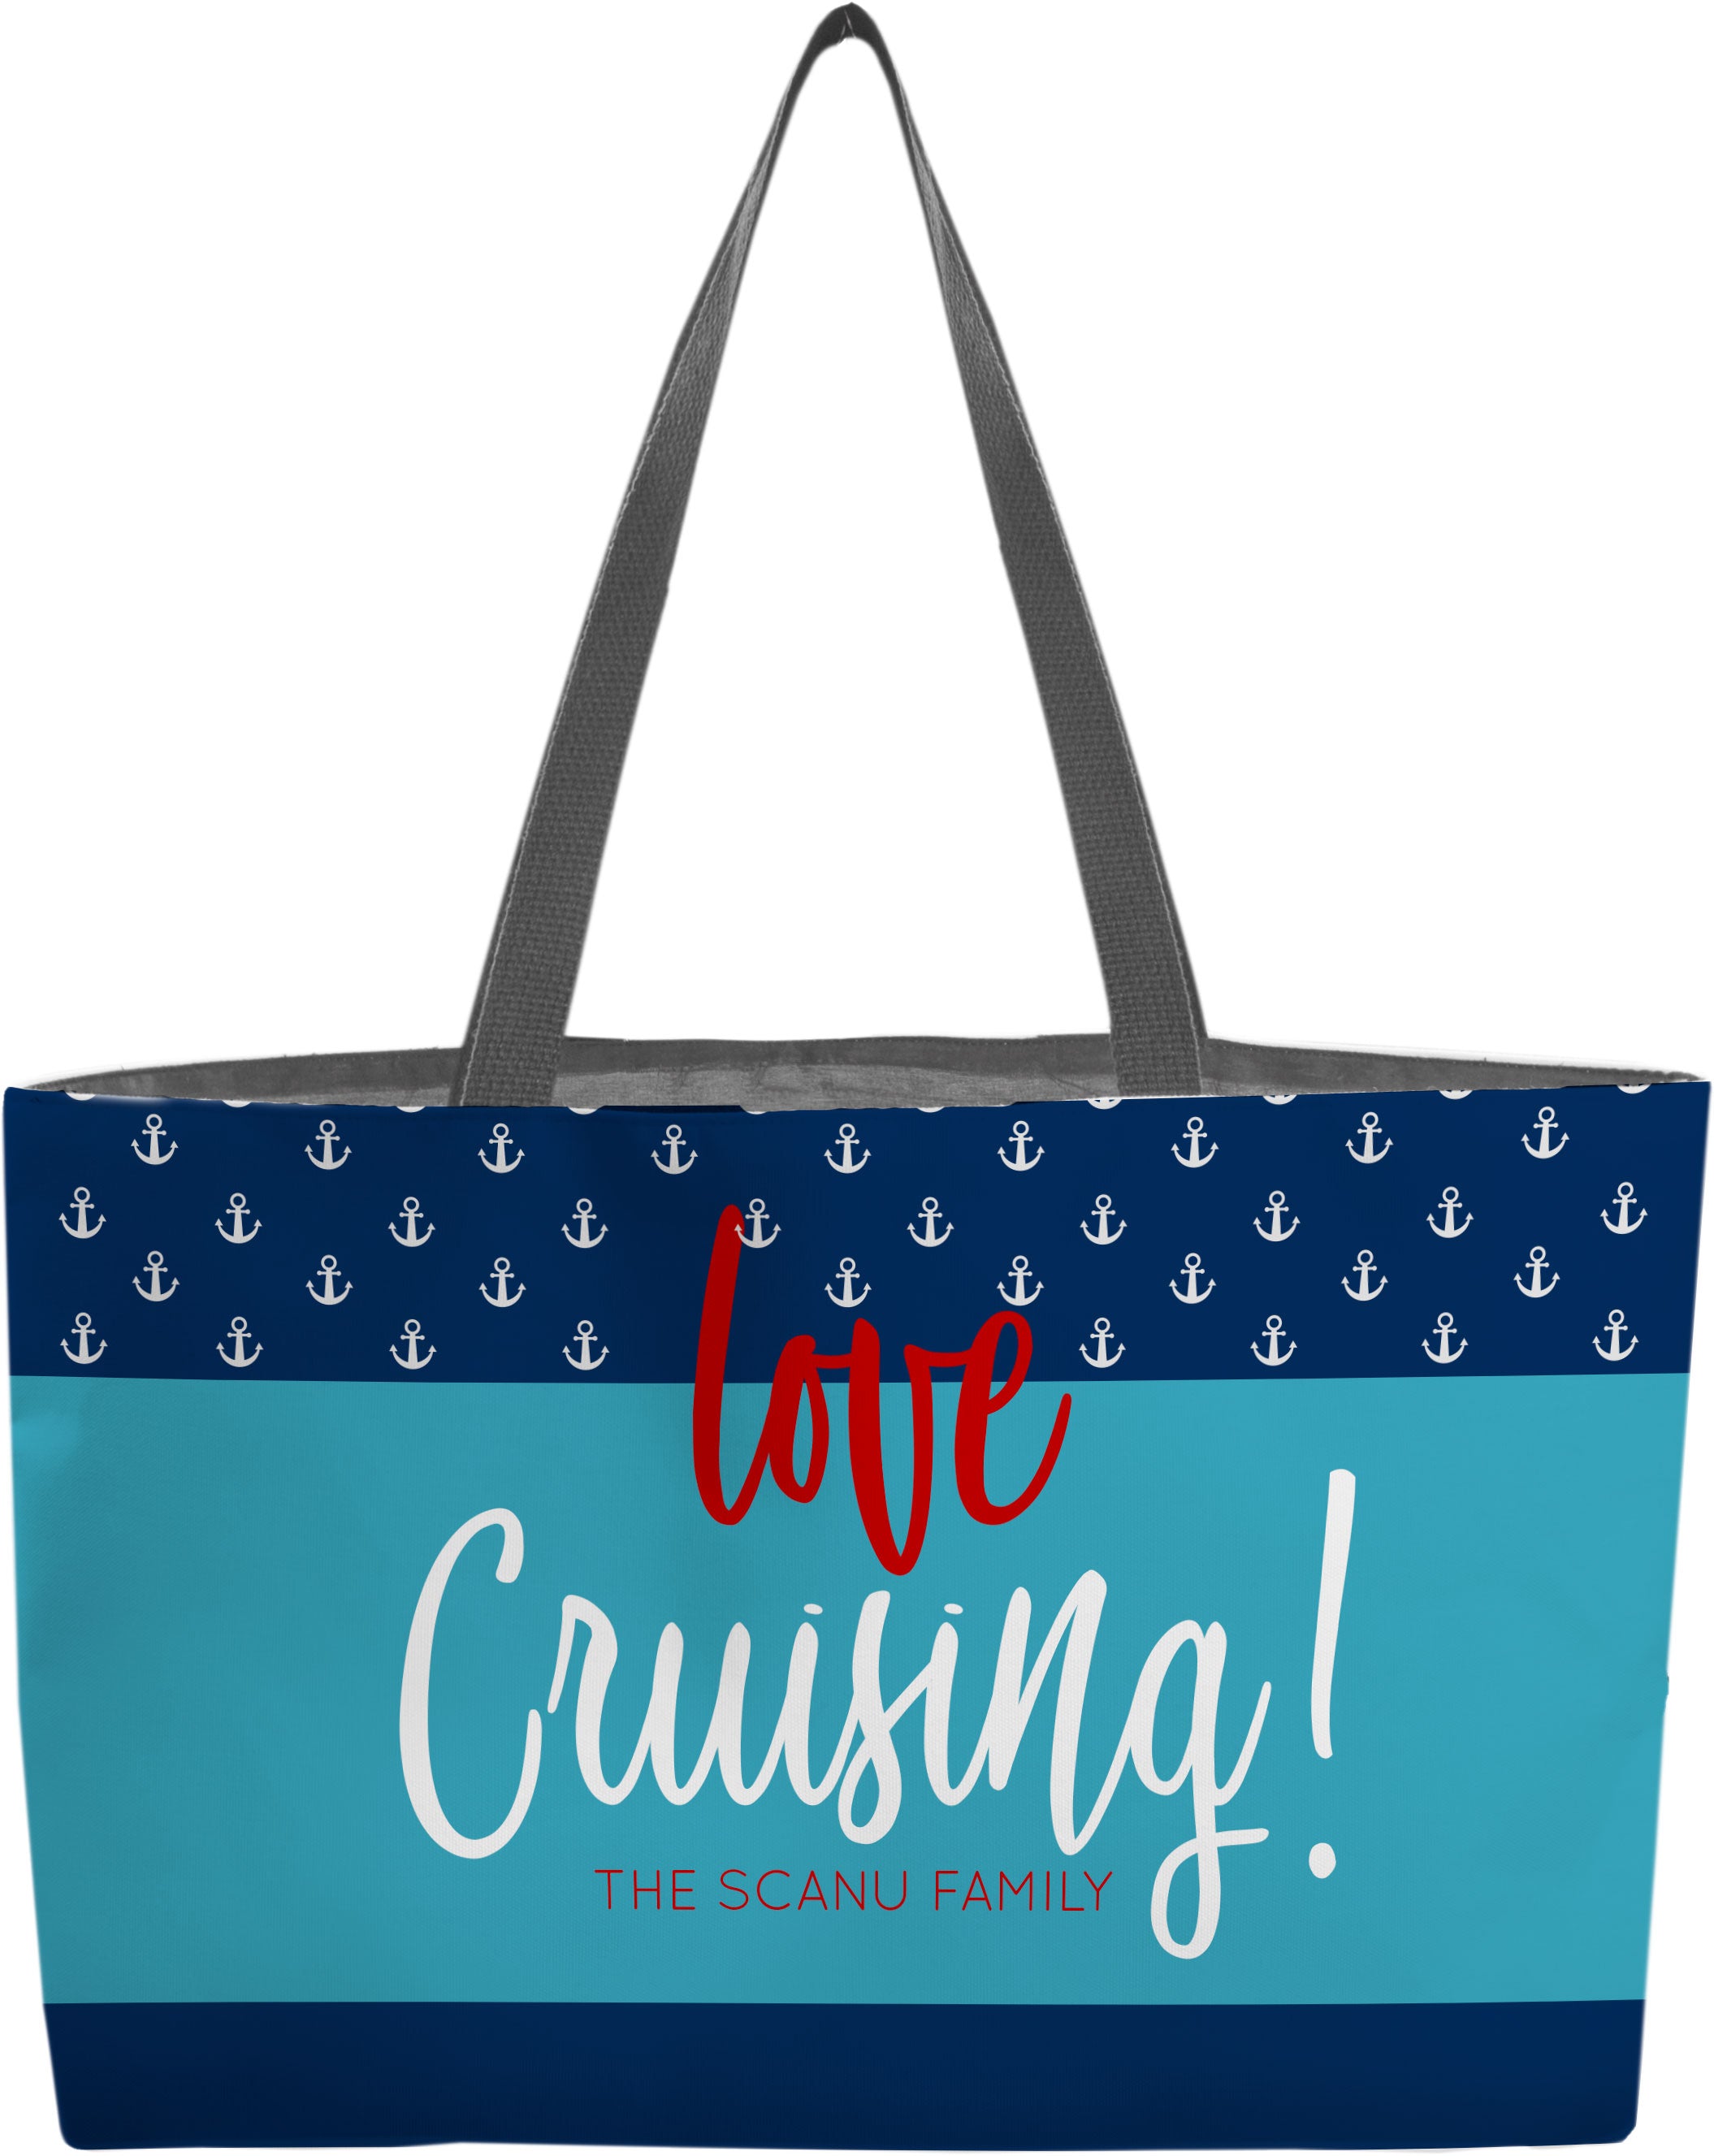 Cruise Life - Personalized Cruising Tote Bag